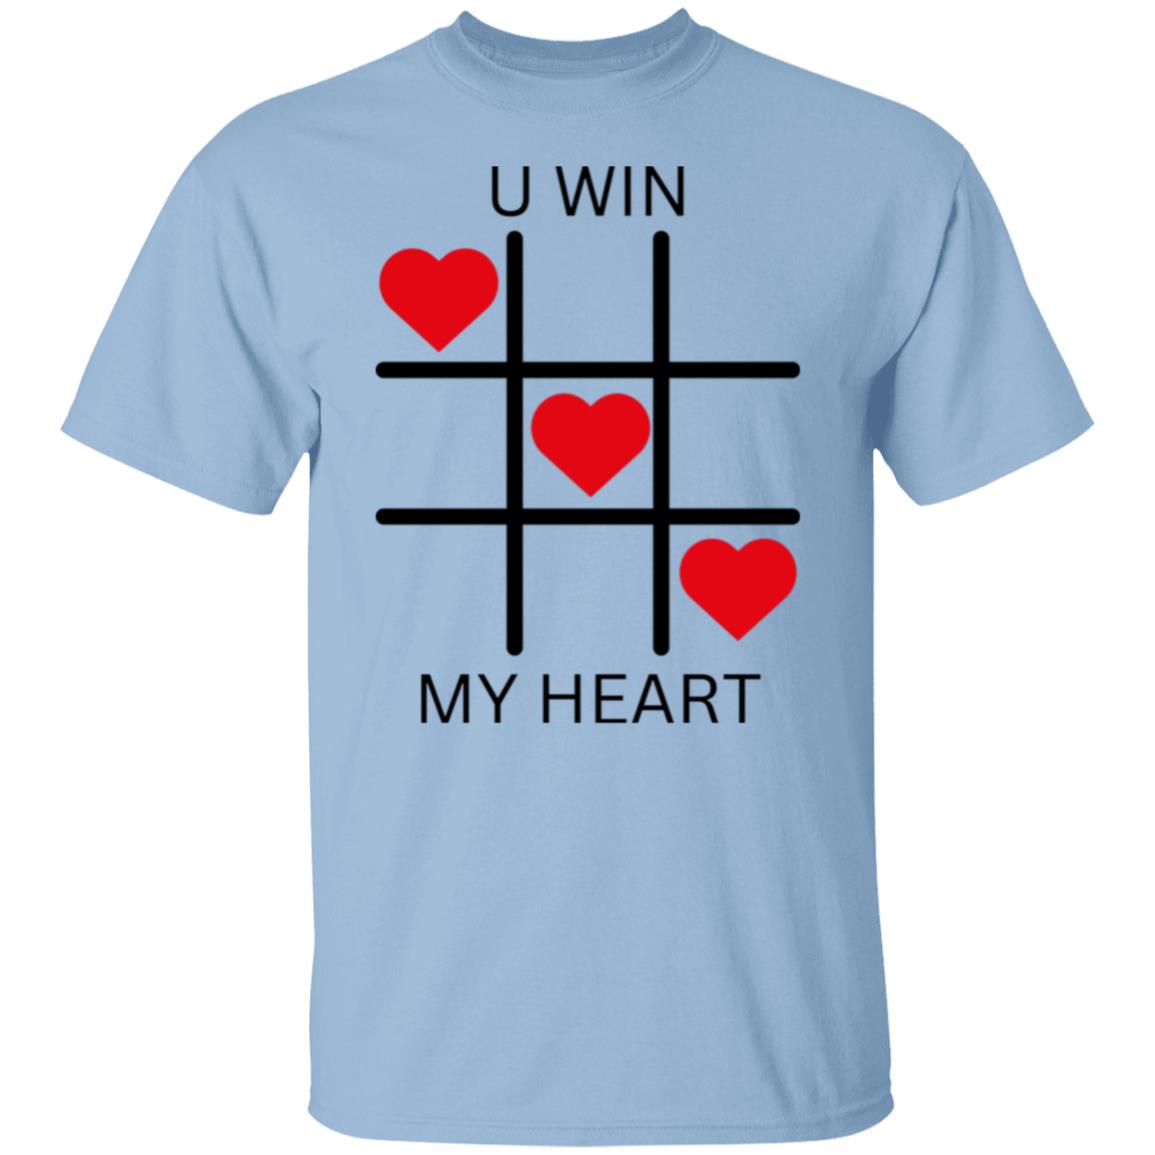 U WIN MY HEART T-Shirt